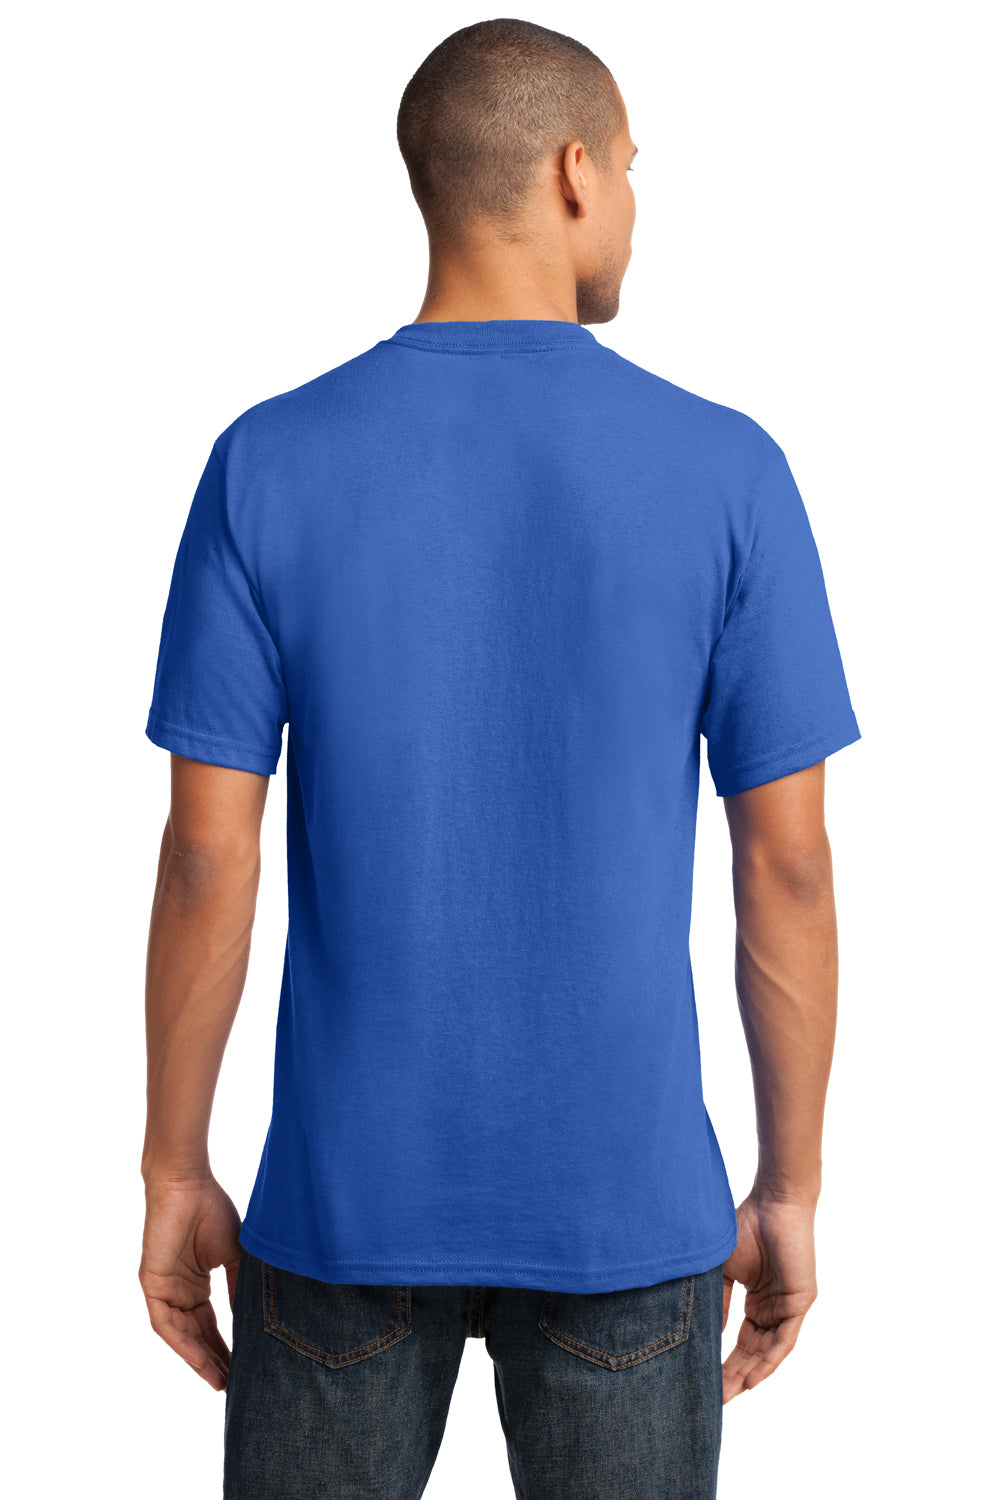 Port & Company PC54V Mens Core Short Sleeve V-Neck T-Shirt Royal Blue Back